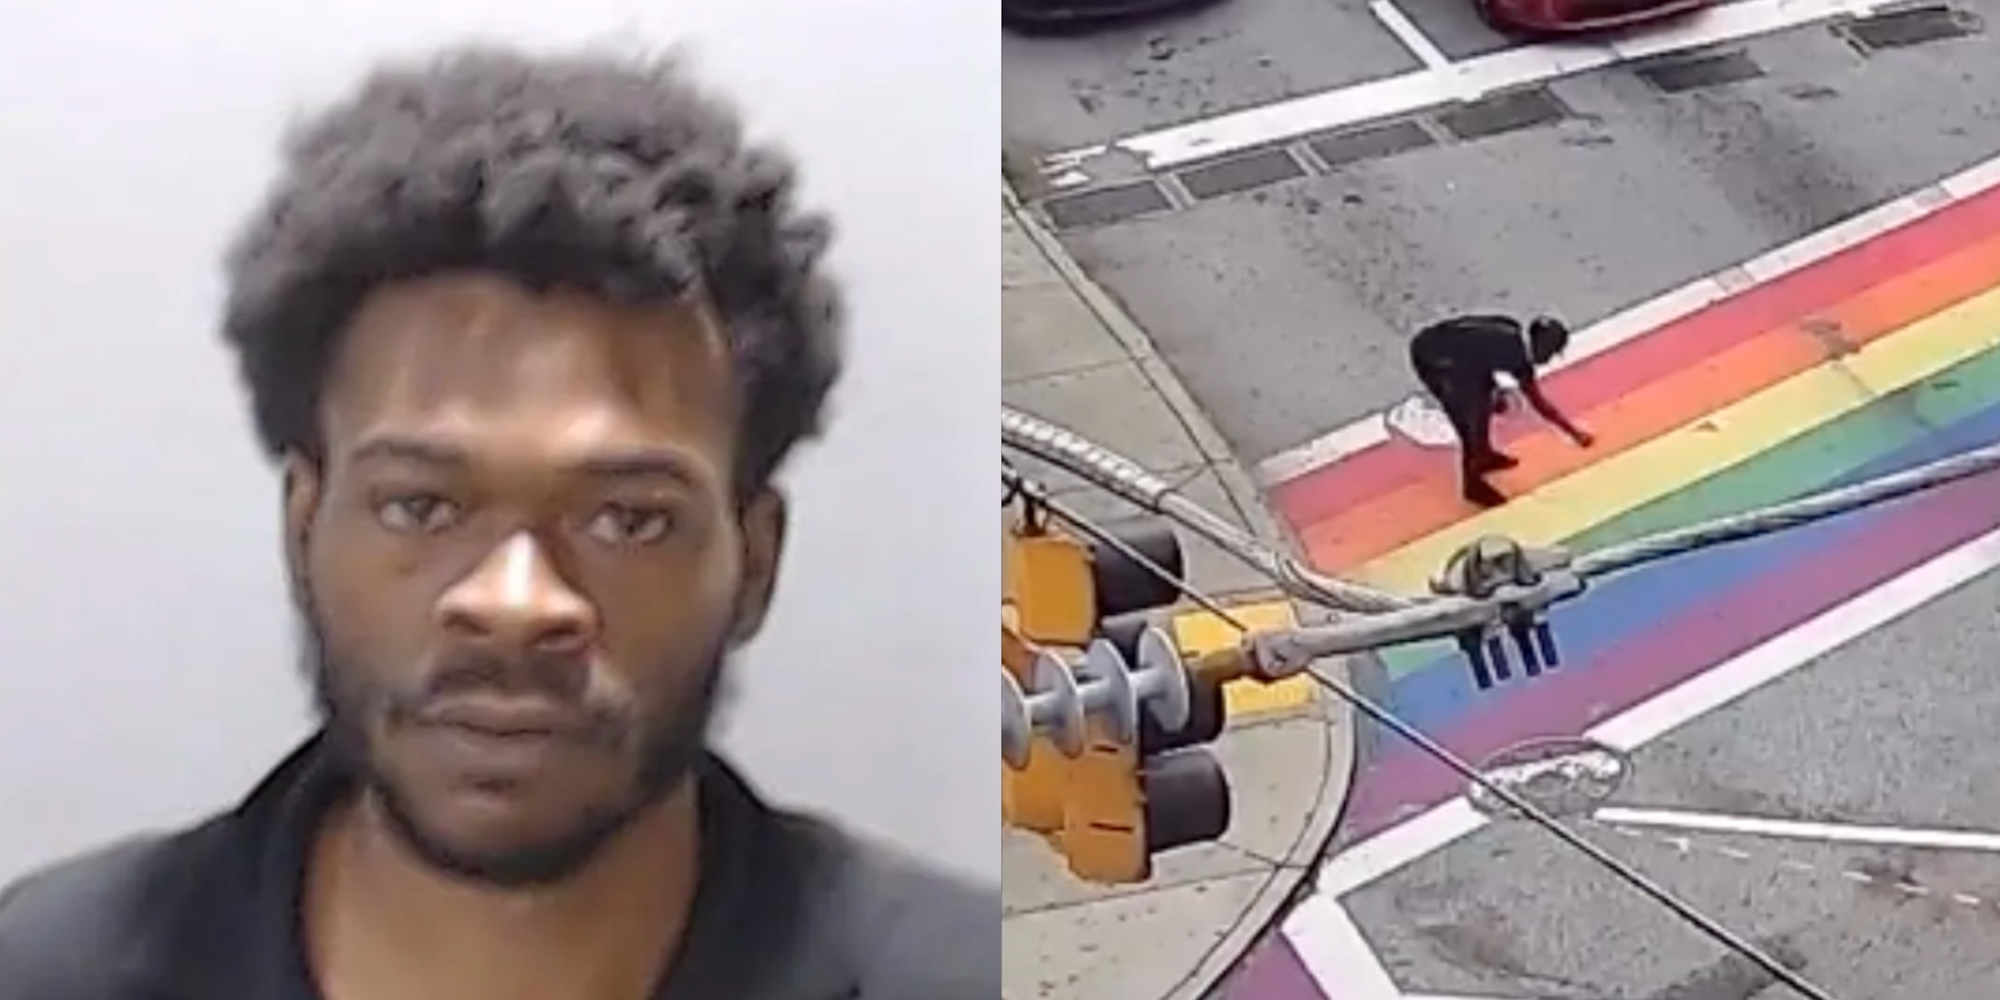 Atlanta police identify man accused of defacing rainbow crosswalks with swastikas